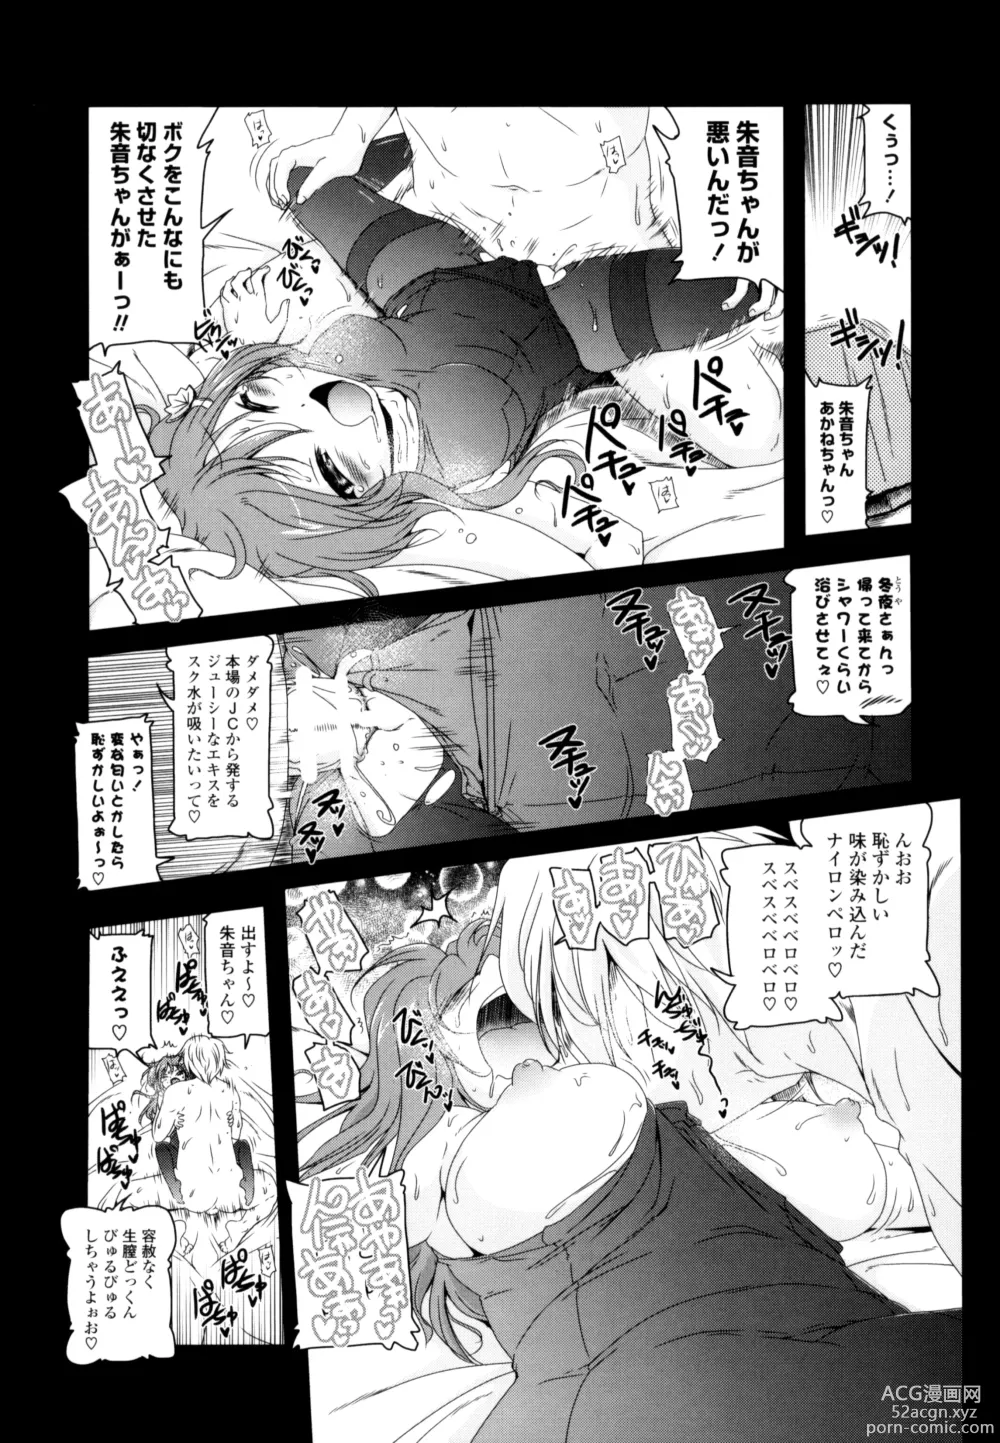 Page 7 of manga NAMA NAKA 100%!